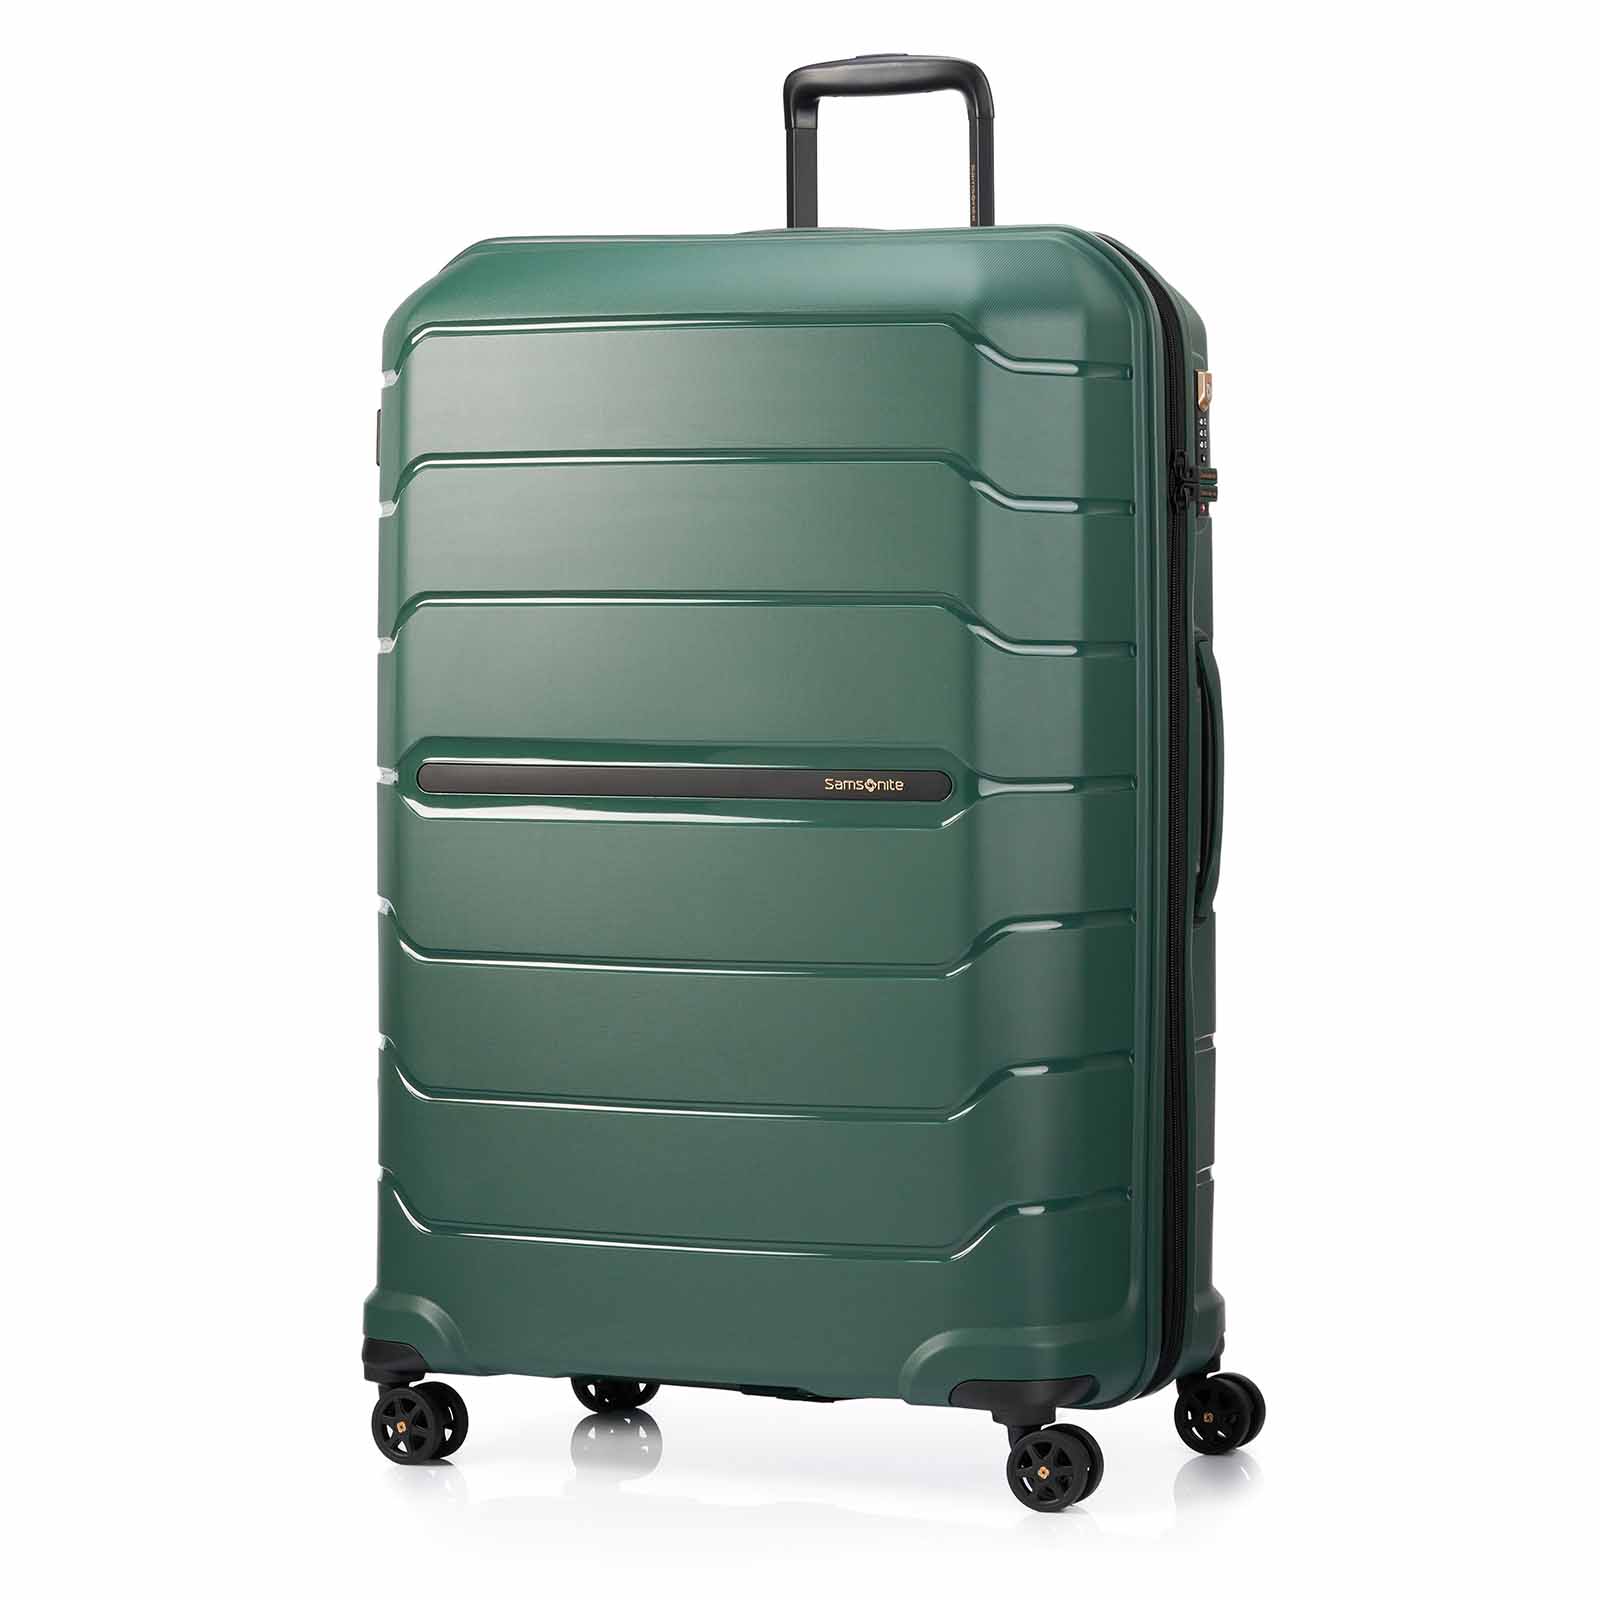 Samsonite-Oc2lite-75cm-Suitcase-Urban-Green-Front-Angle